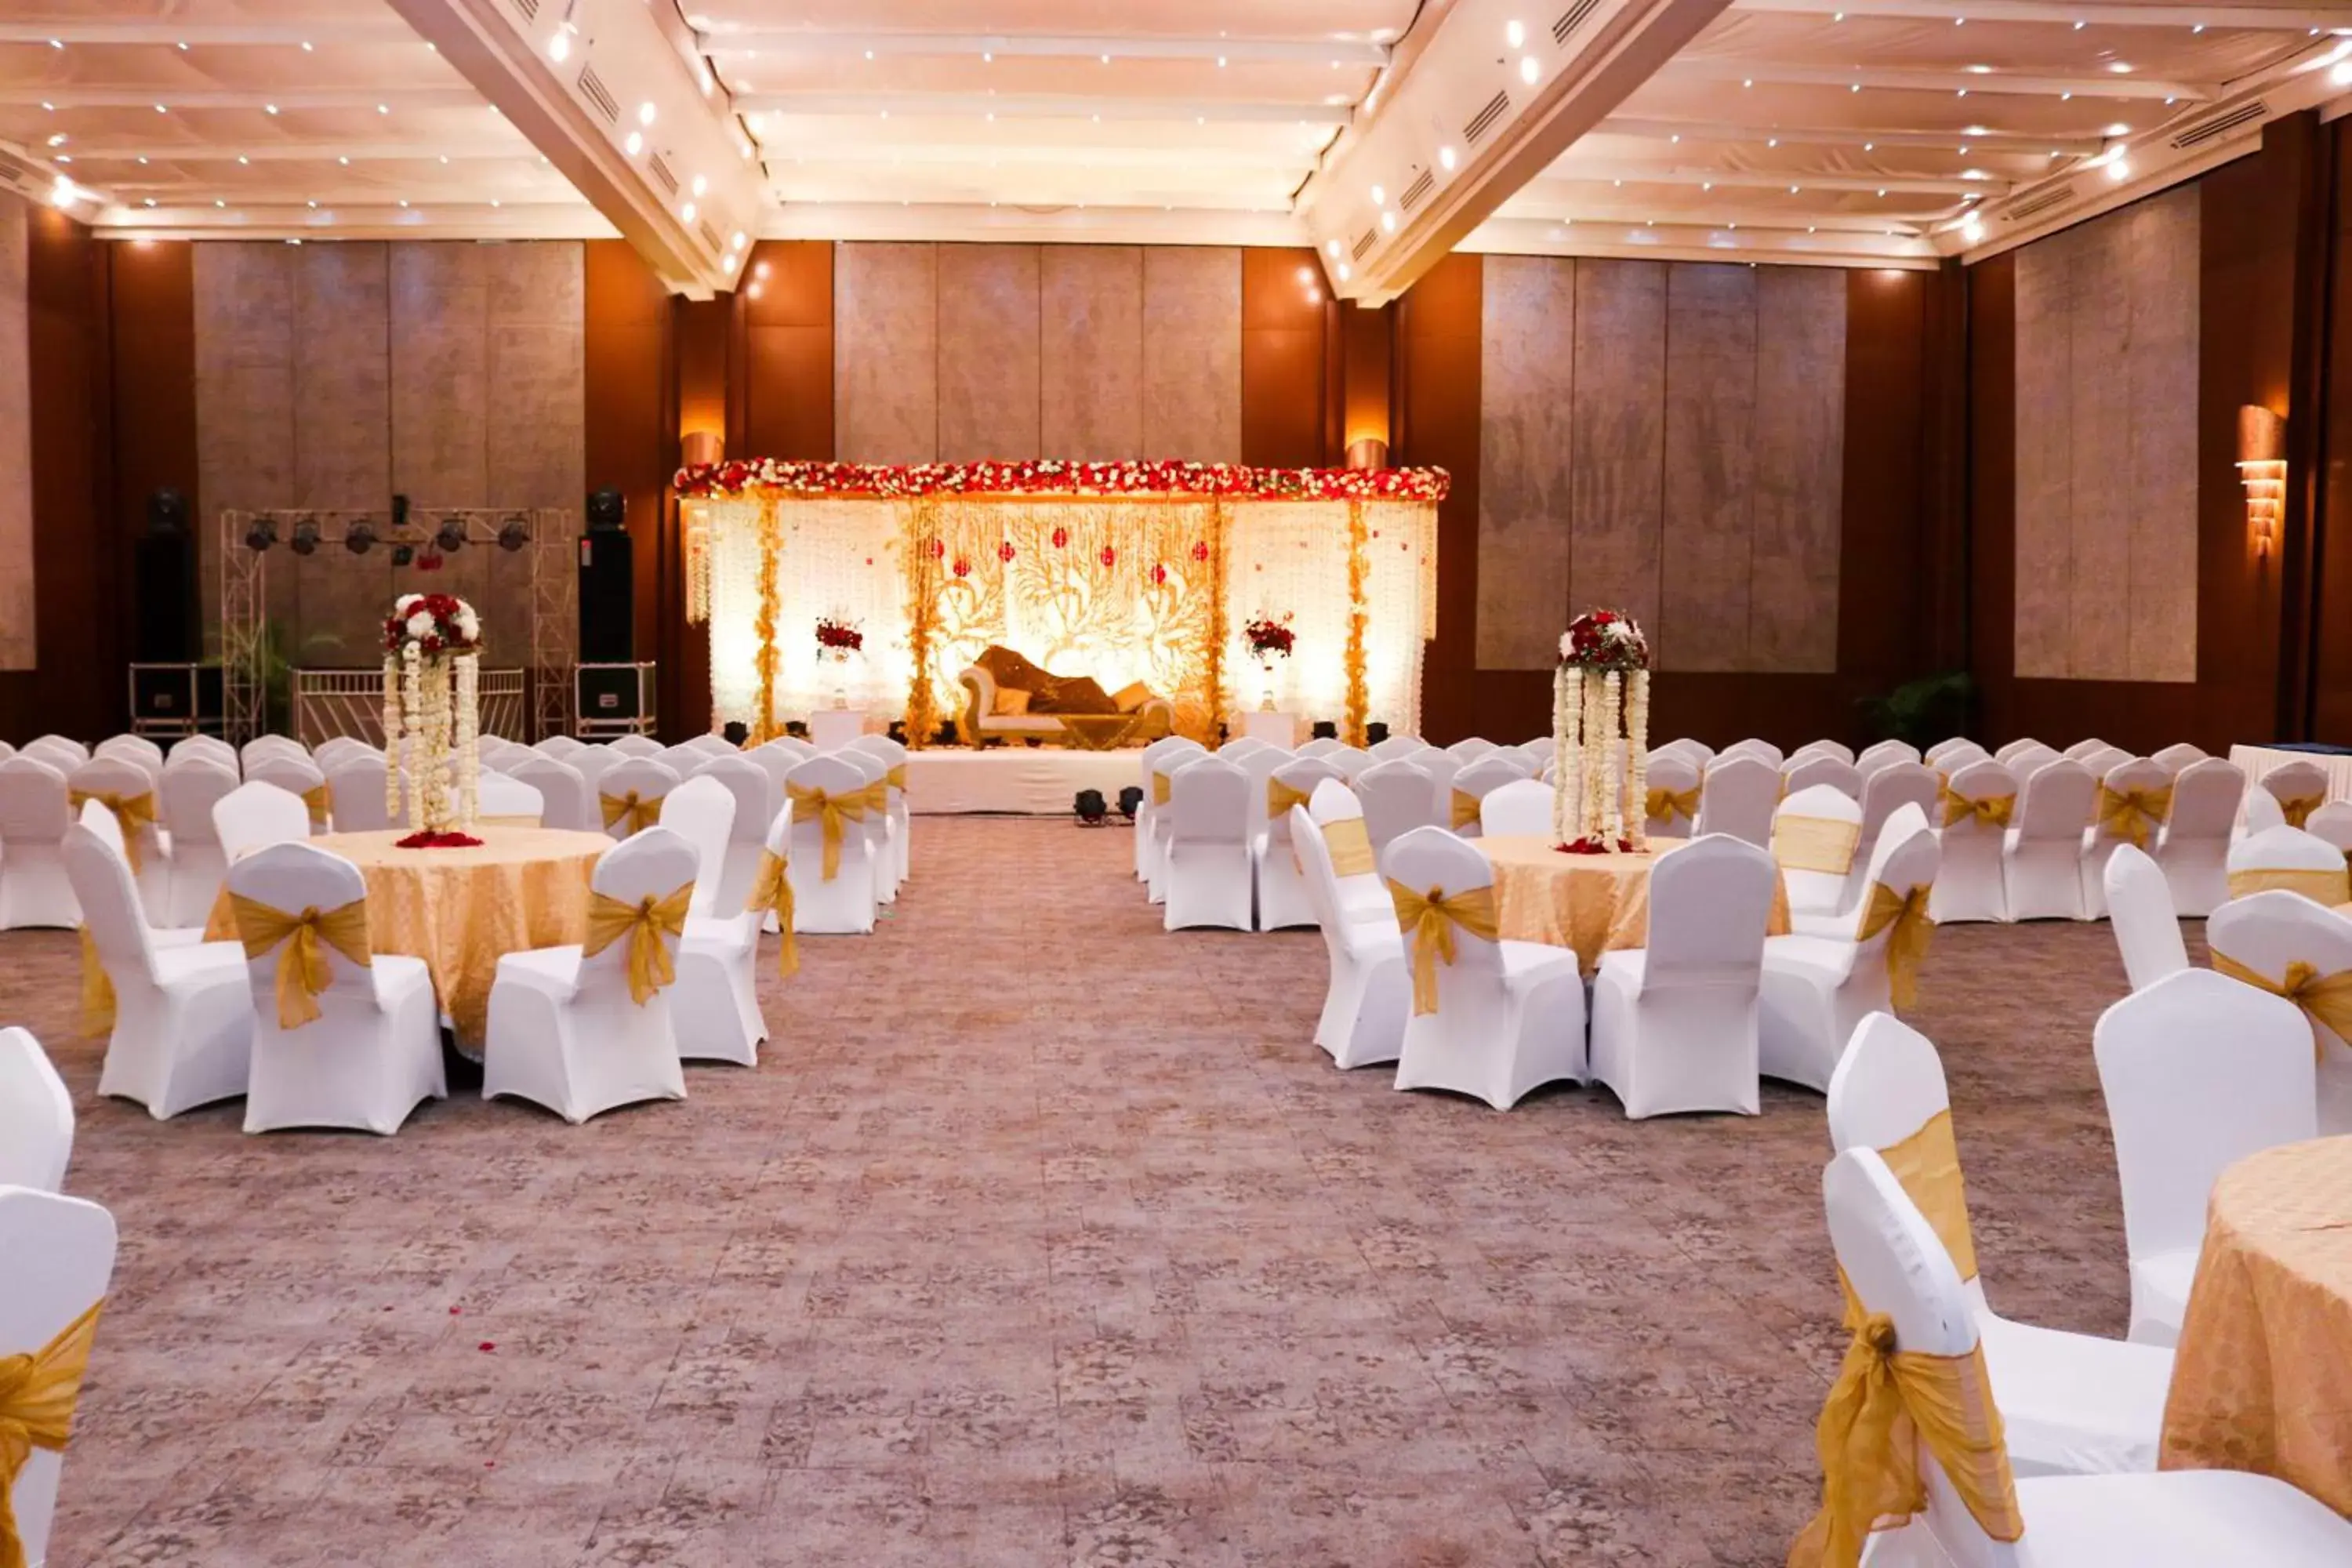 Banquet/Function facilities, Banquet Facilities in Radisson Blu Hotel, Greater Noida